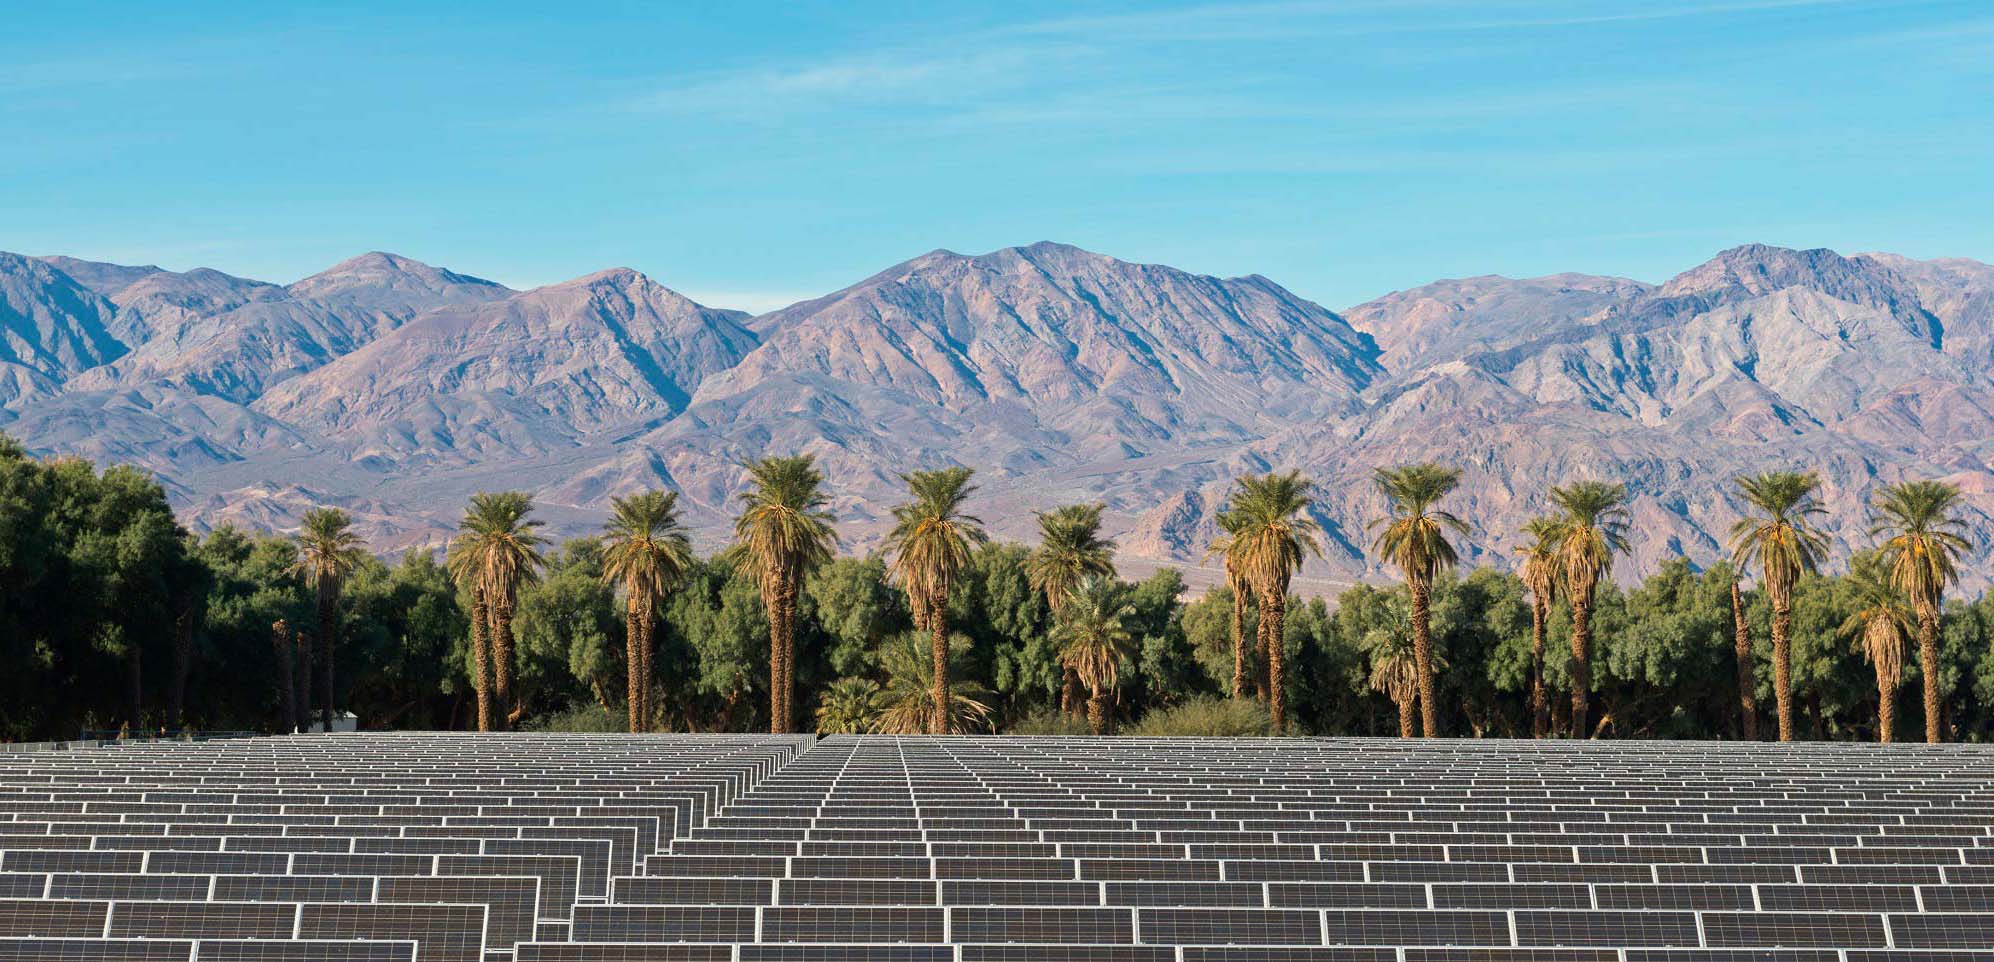  California’s ambitious decarbonisation goals to propel US renewable programs